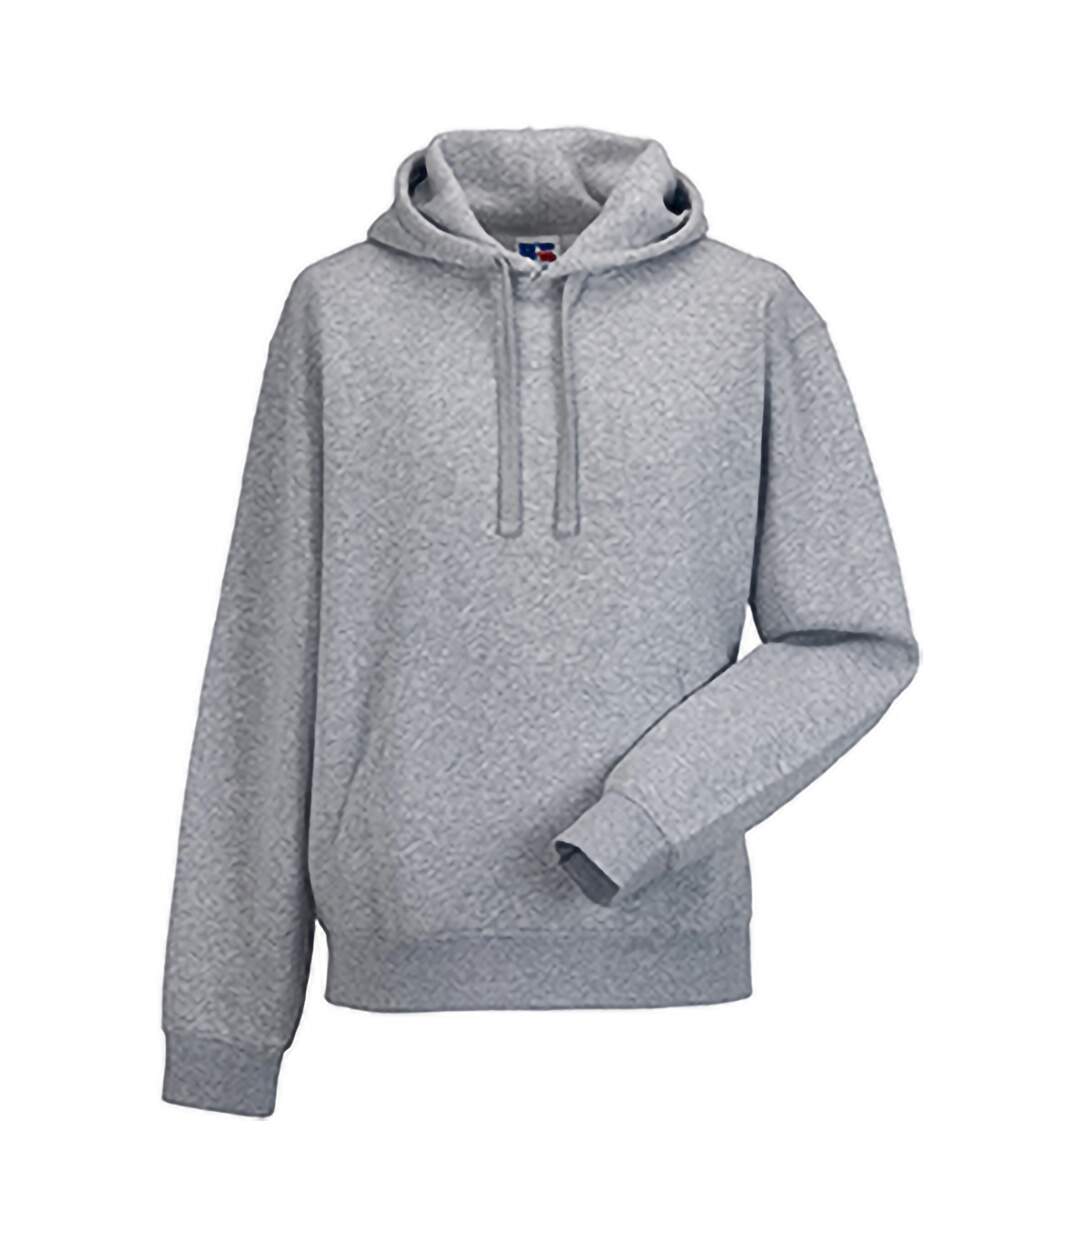 Russell Mens Authentic Hooded Sweatshirt / Hoodie (Light Oxford) - UTBC1498